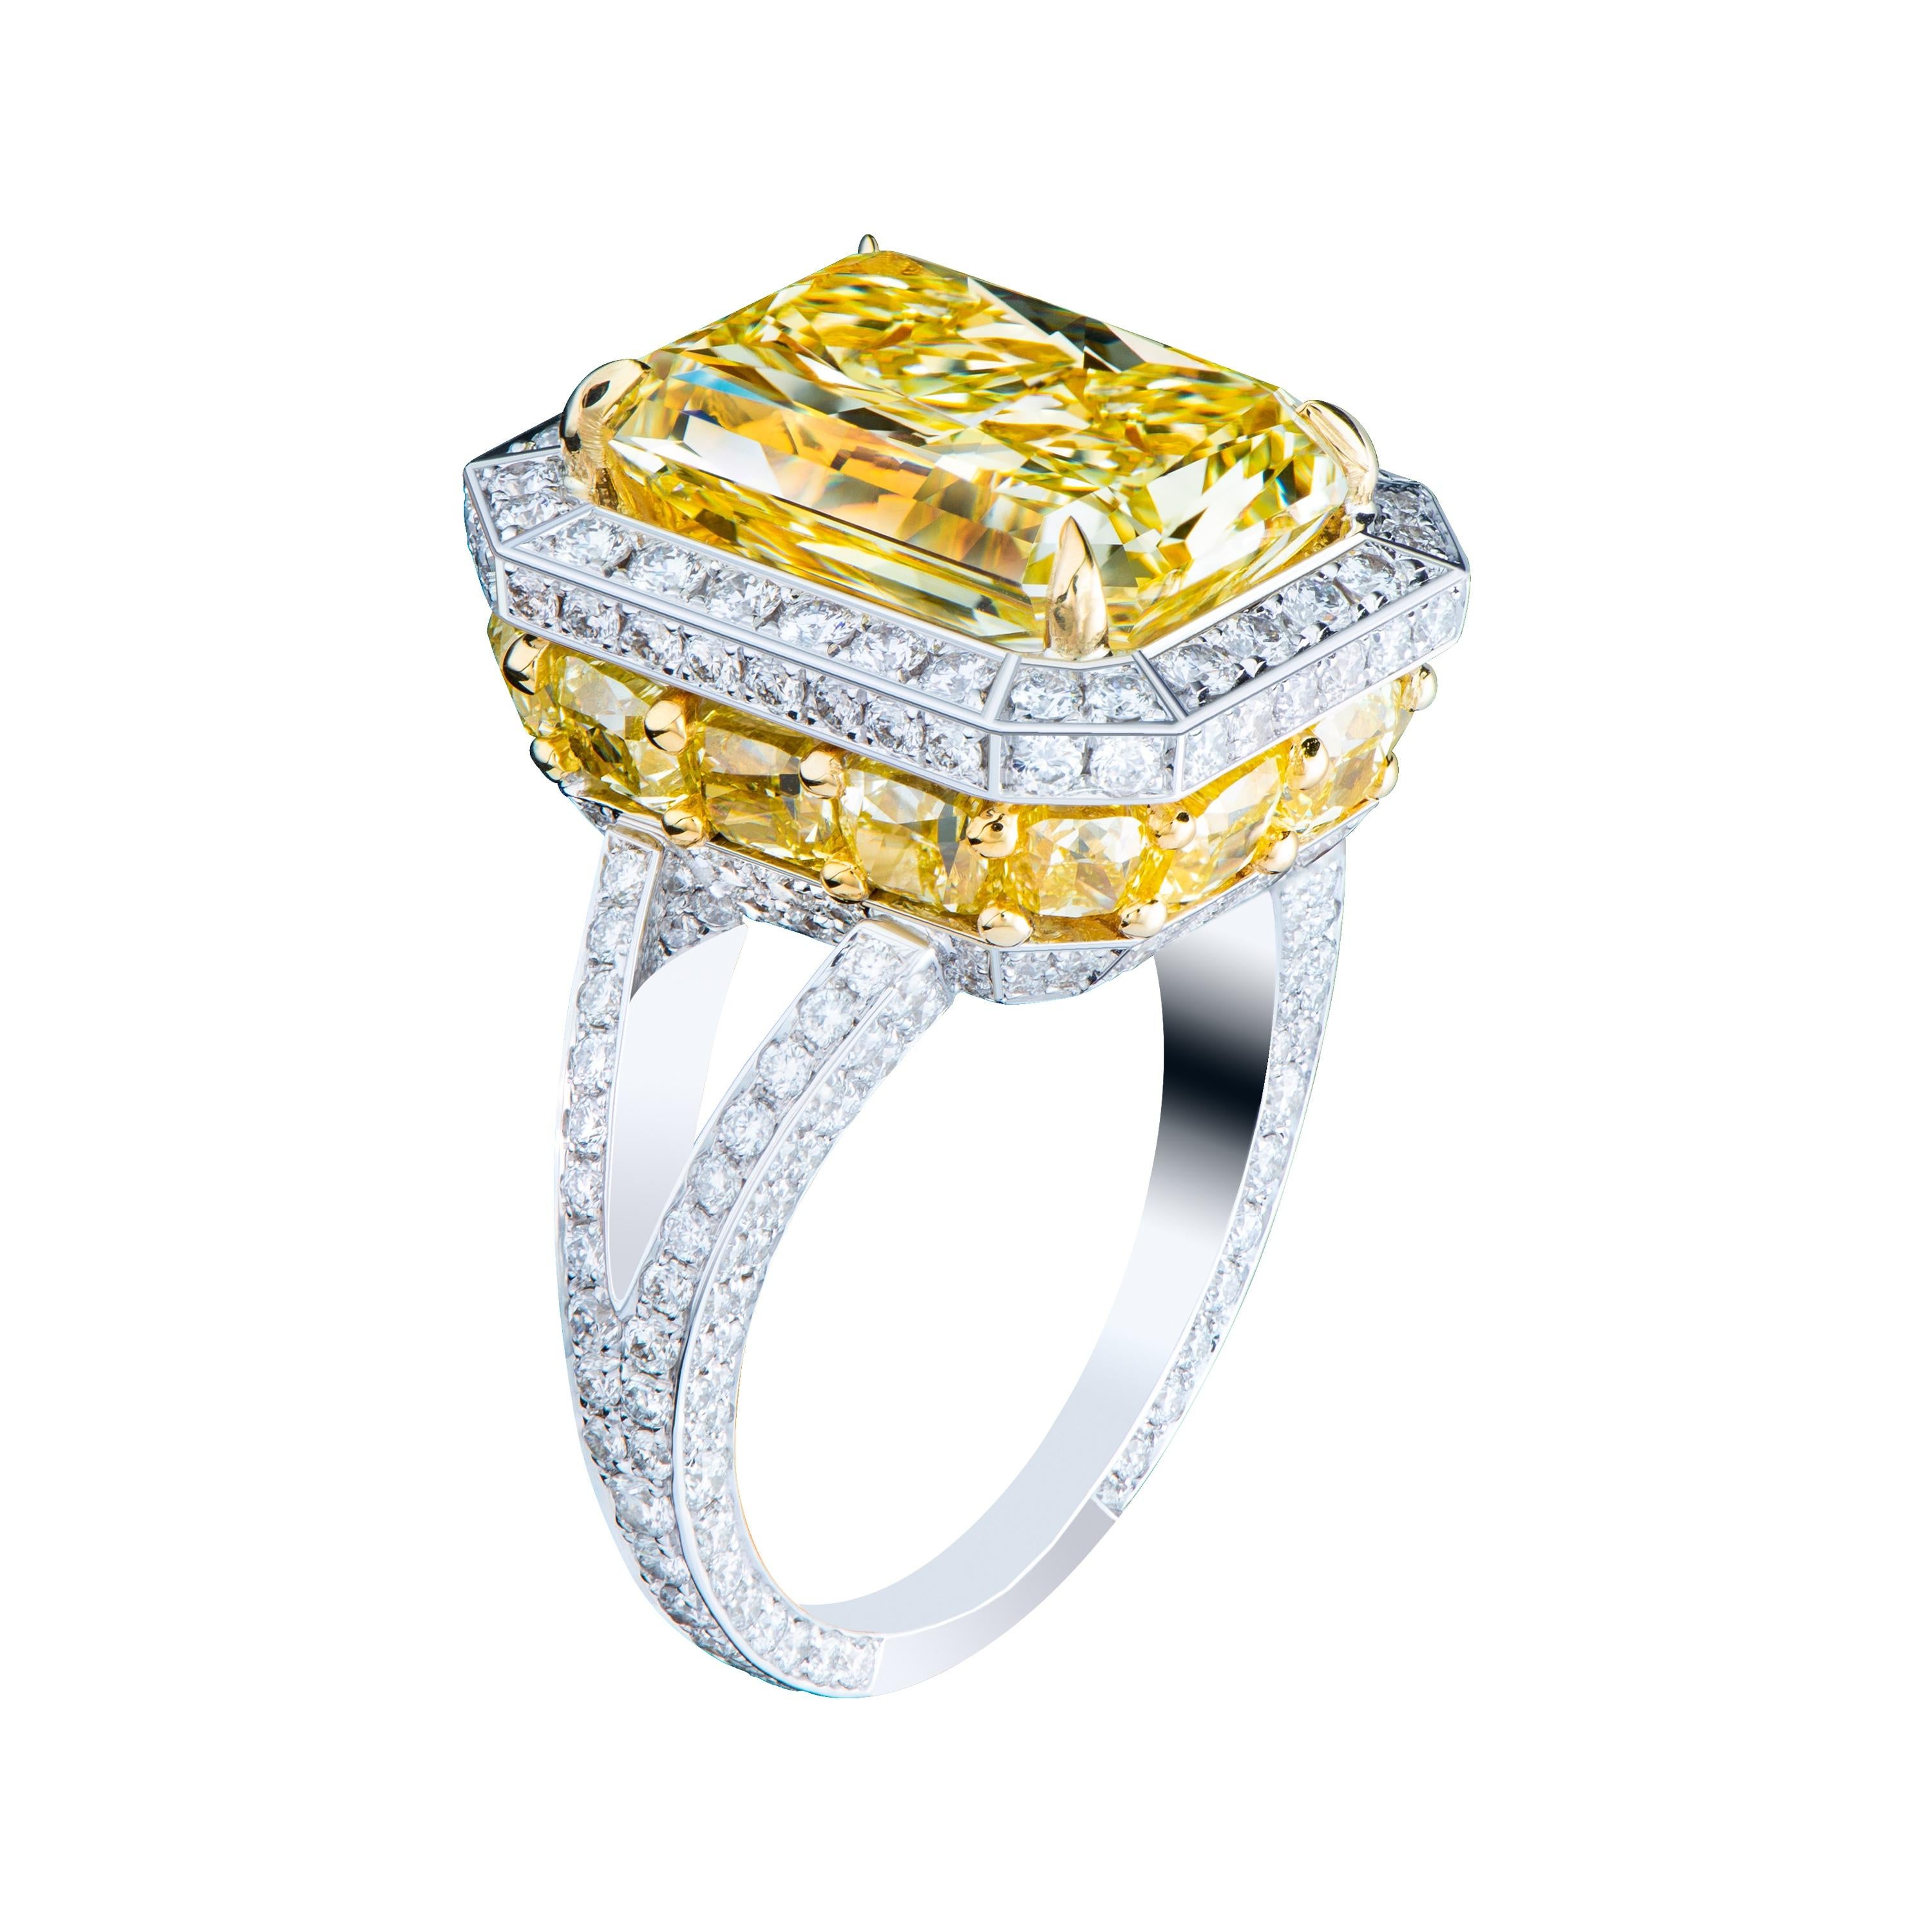 7.73 Carat Radiant Cut Fancy Yellow Diamond Halo Ring